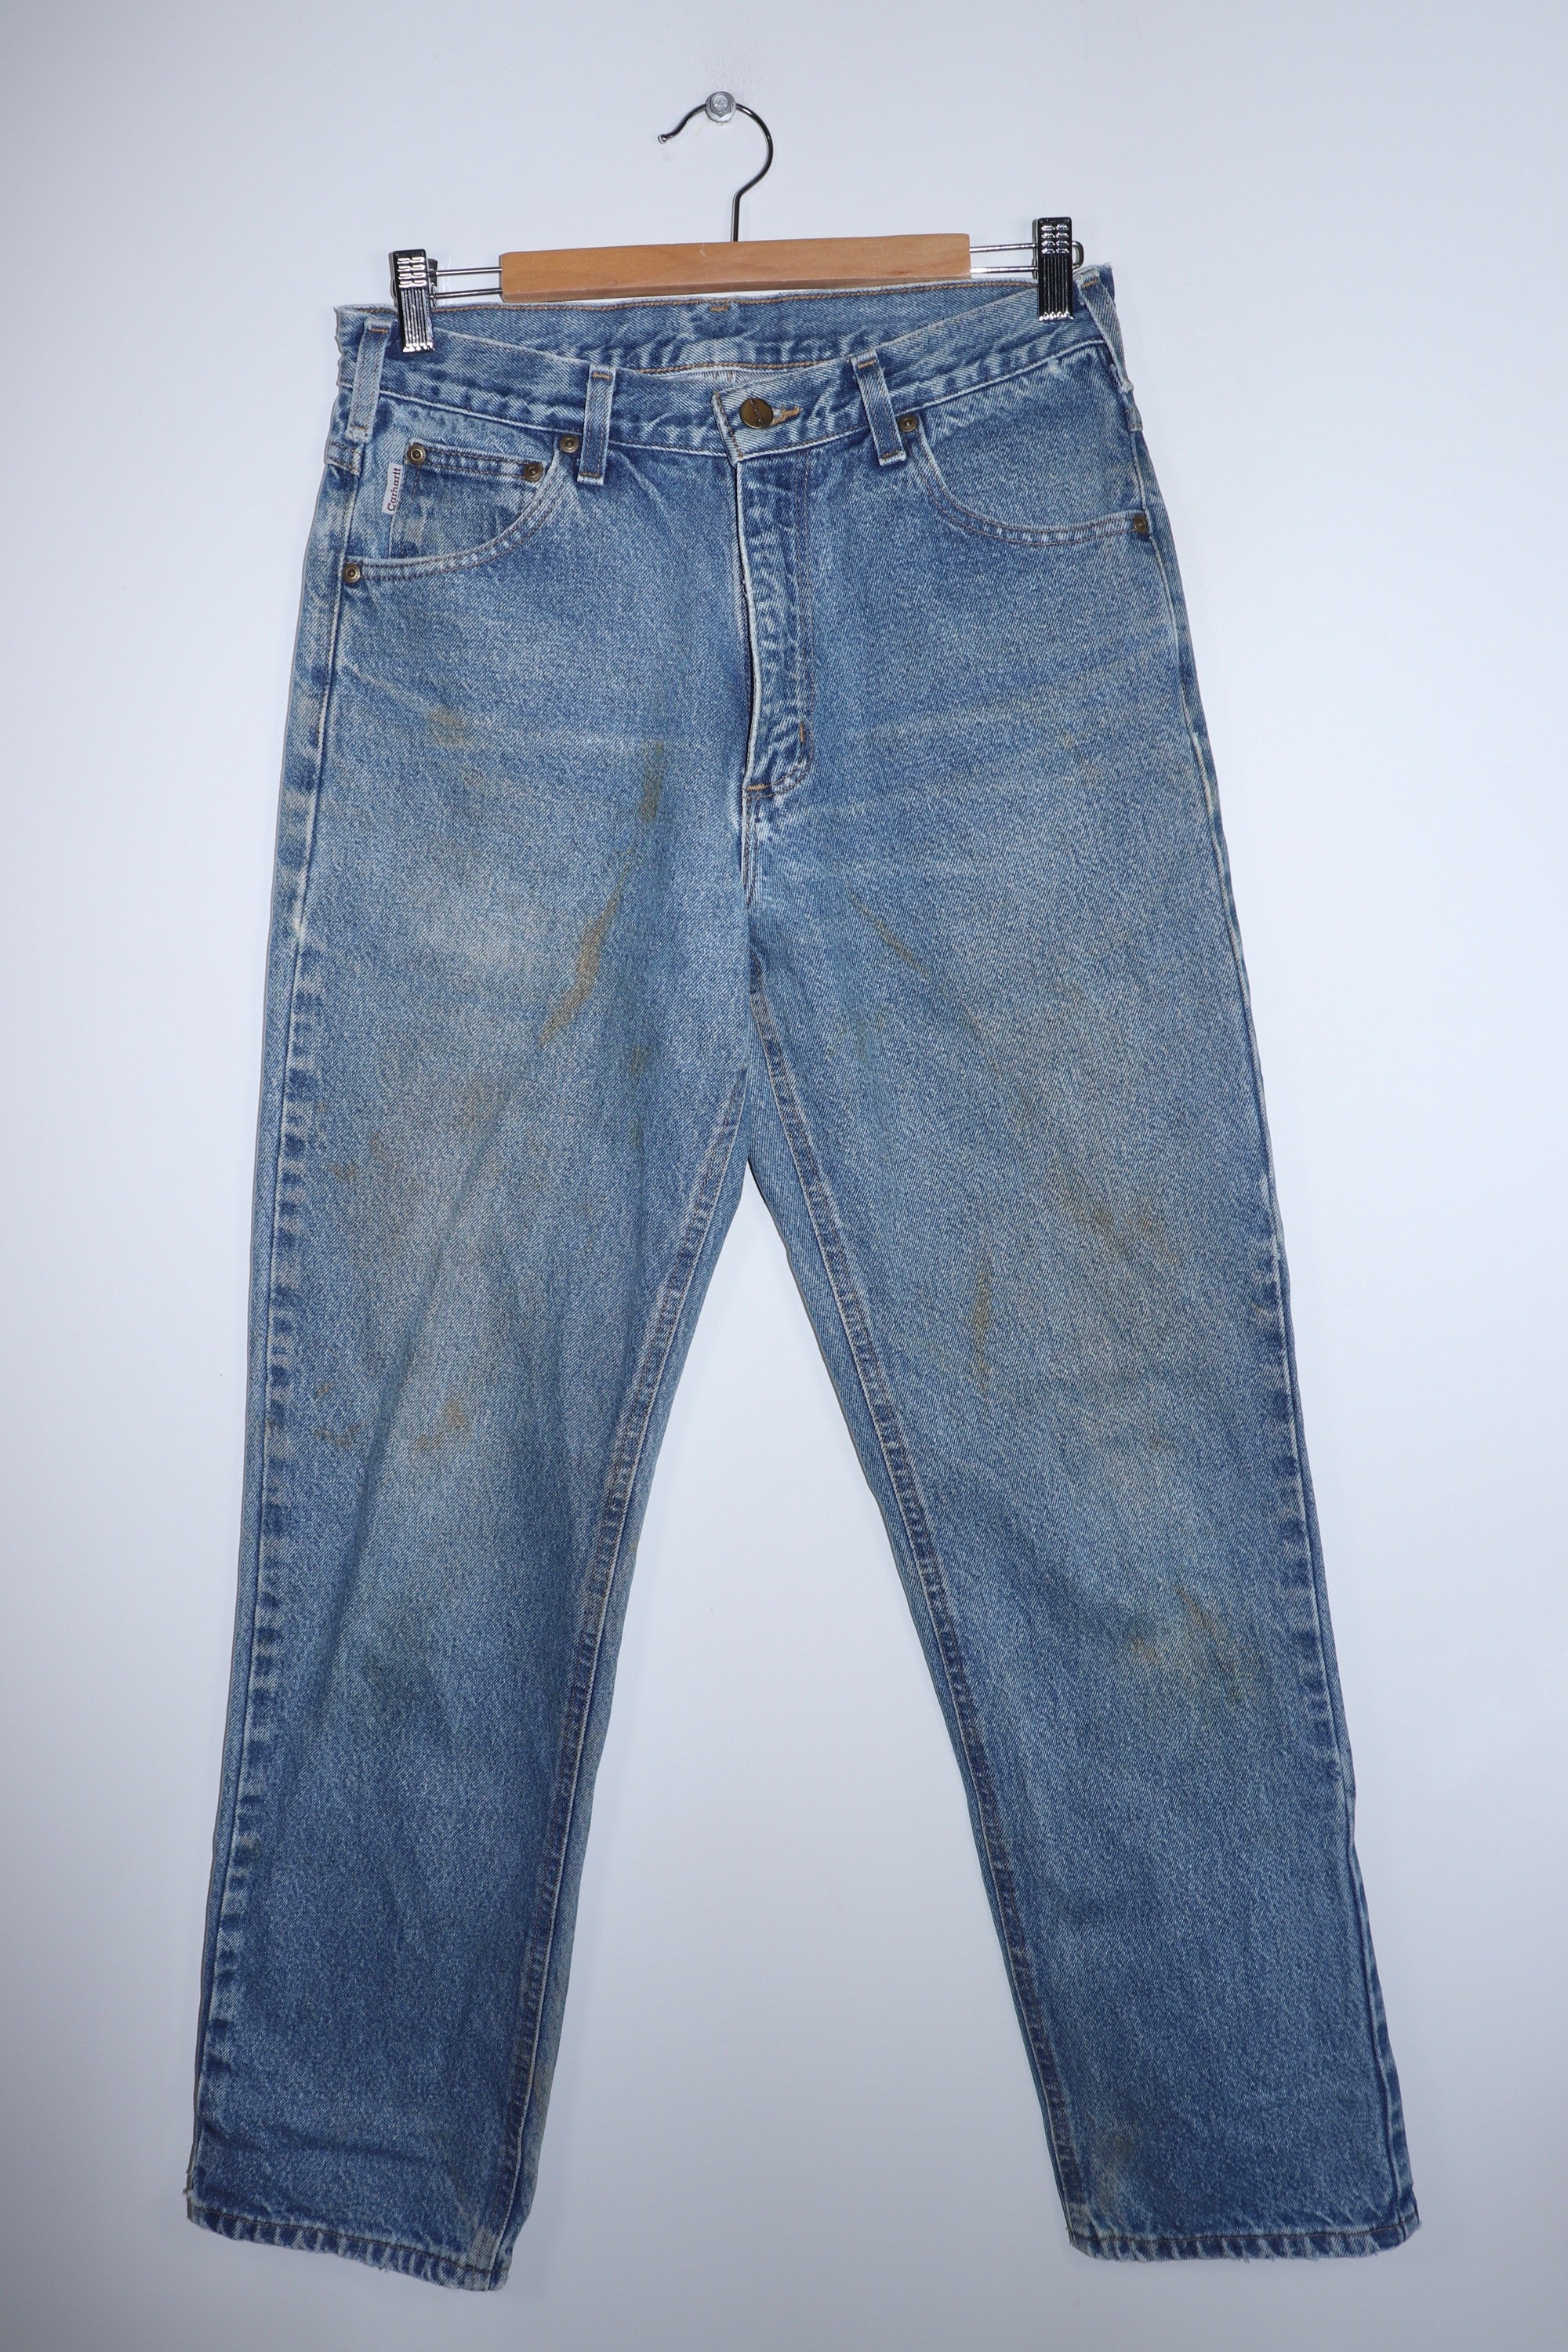 Vintage Carhartt Thick Denim Jeans Size: 31 X 32